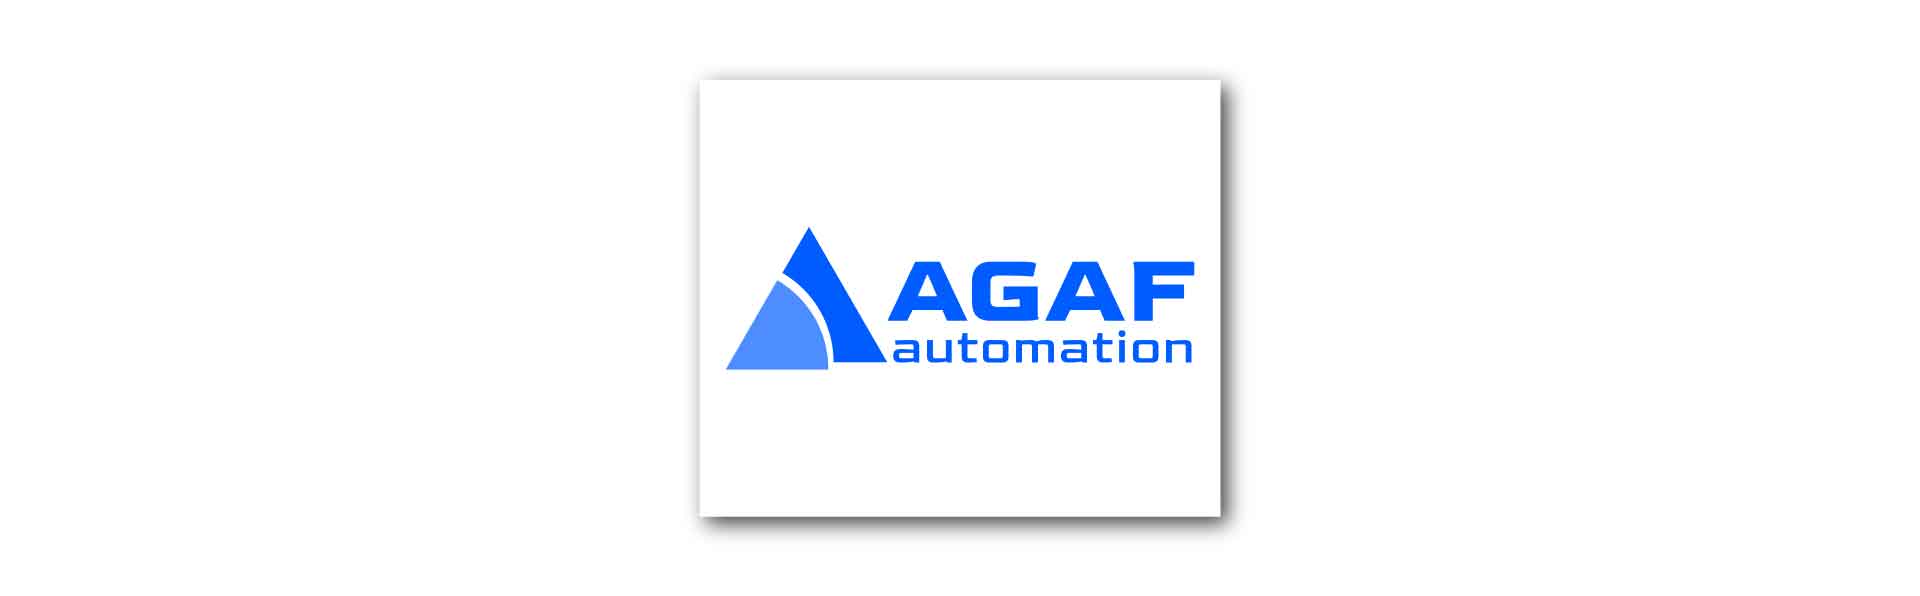 AGAF AUTOMATION GEARBOX